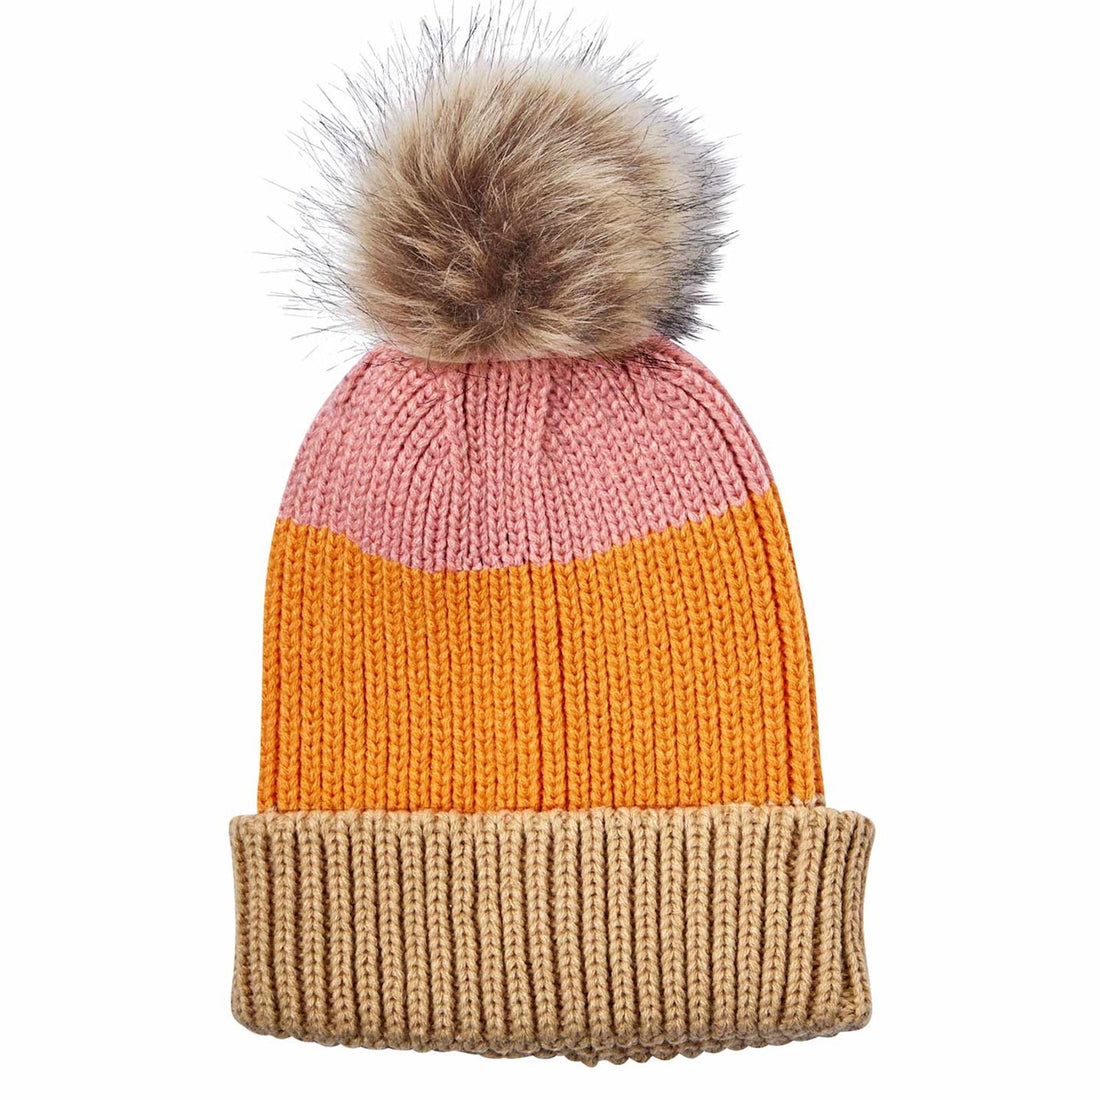 Adorable Chelsea Orange Knit Beanie Hat - rockflowerpaper